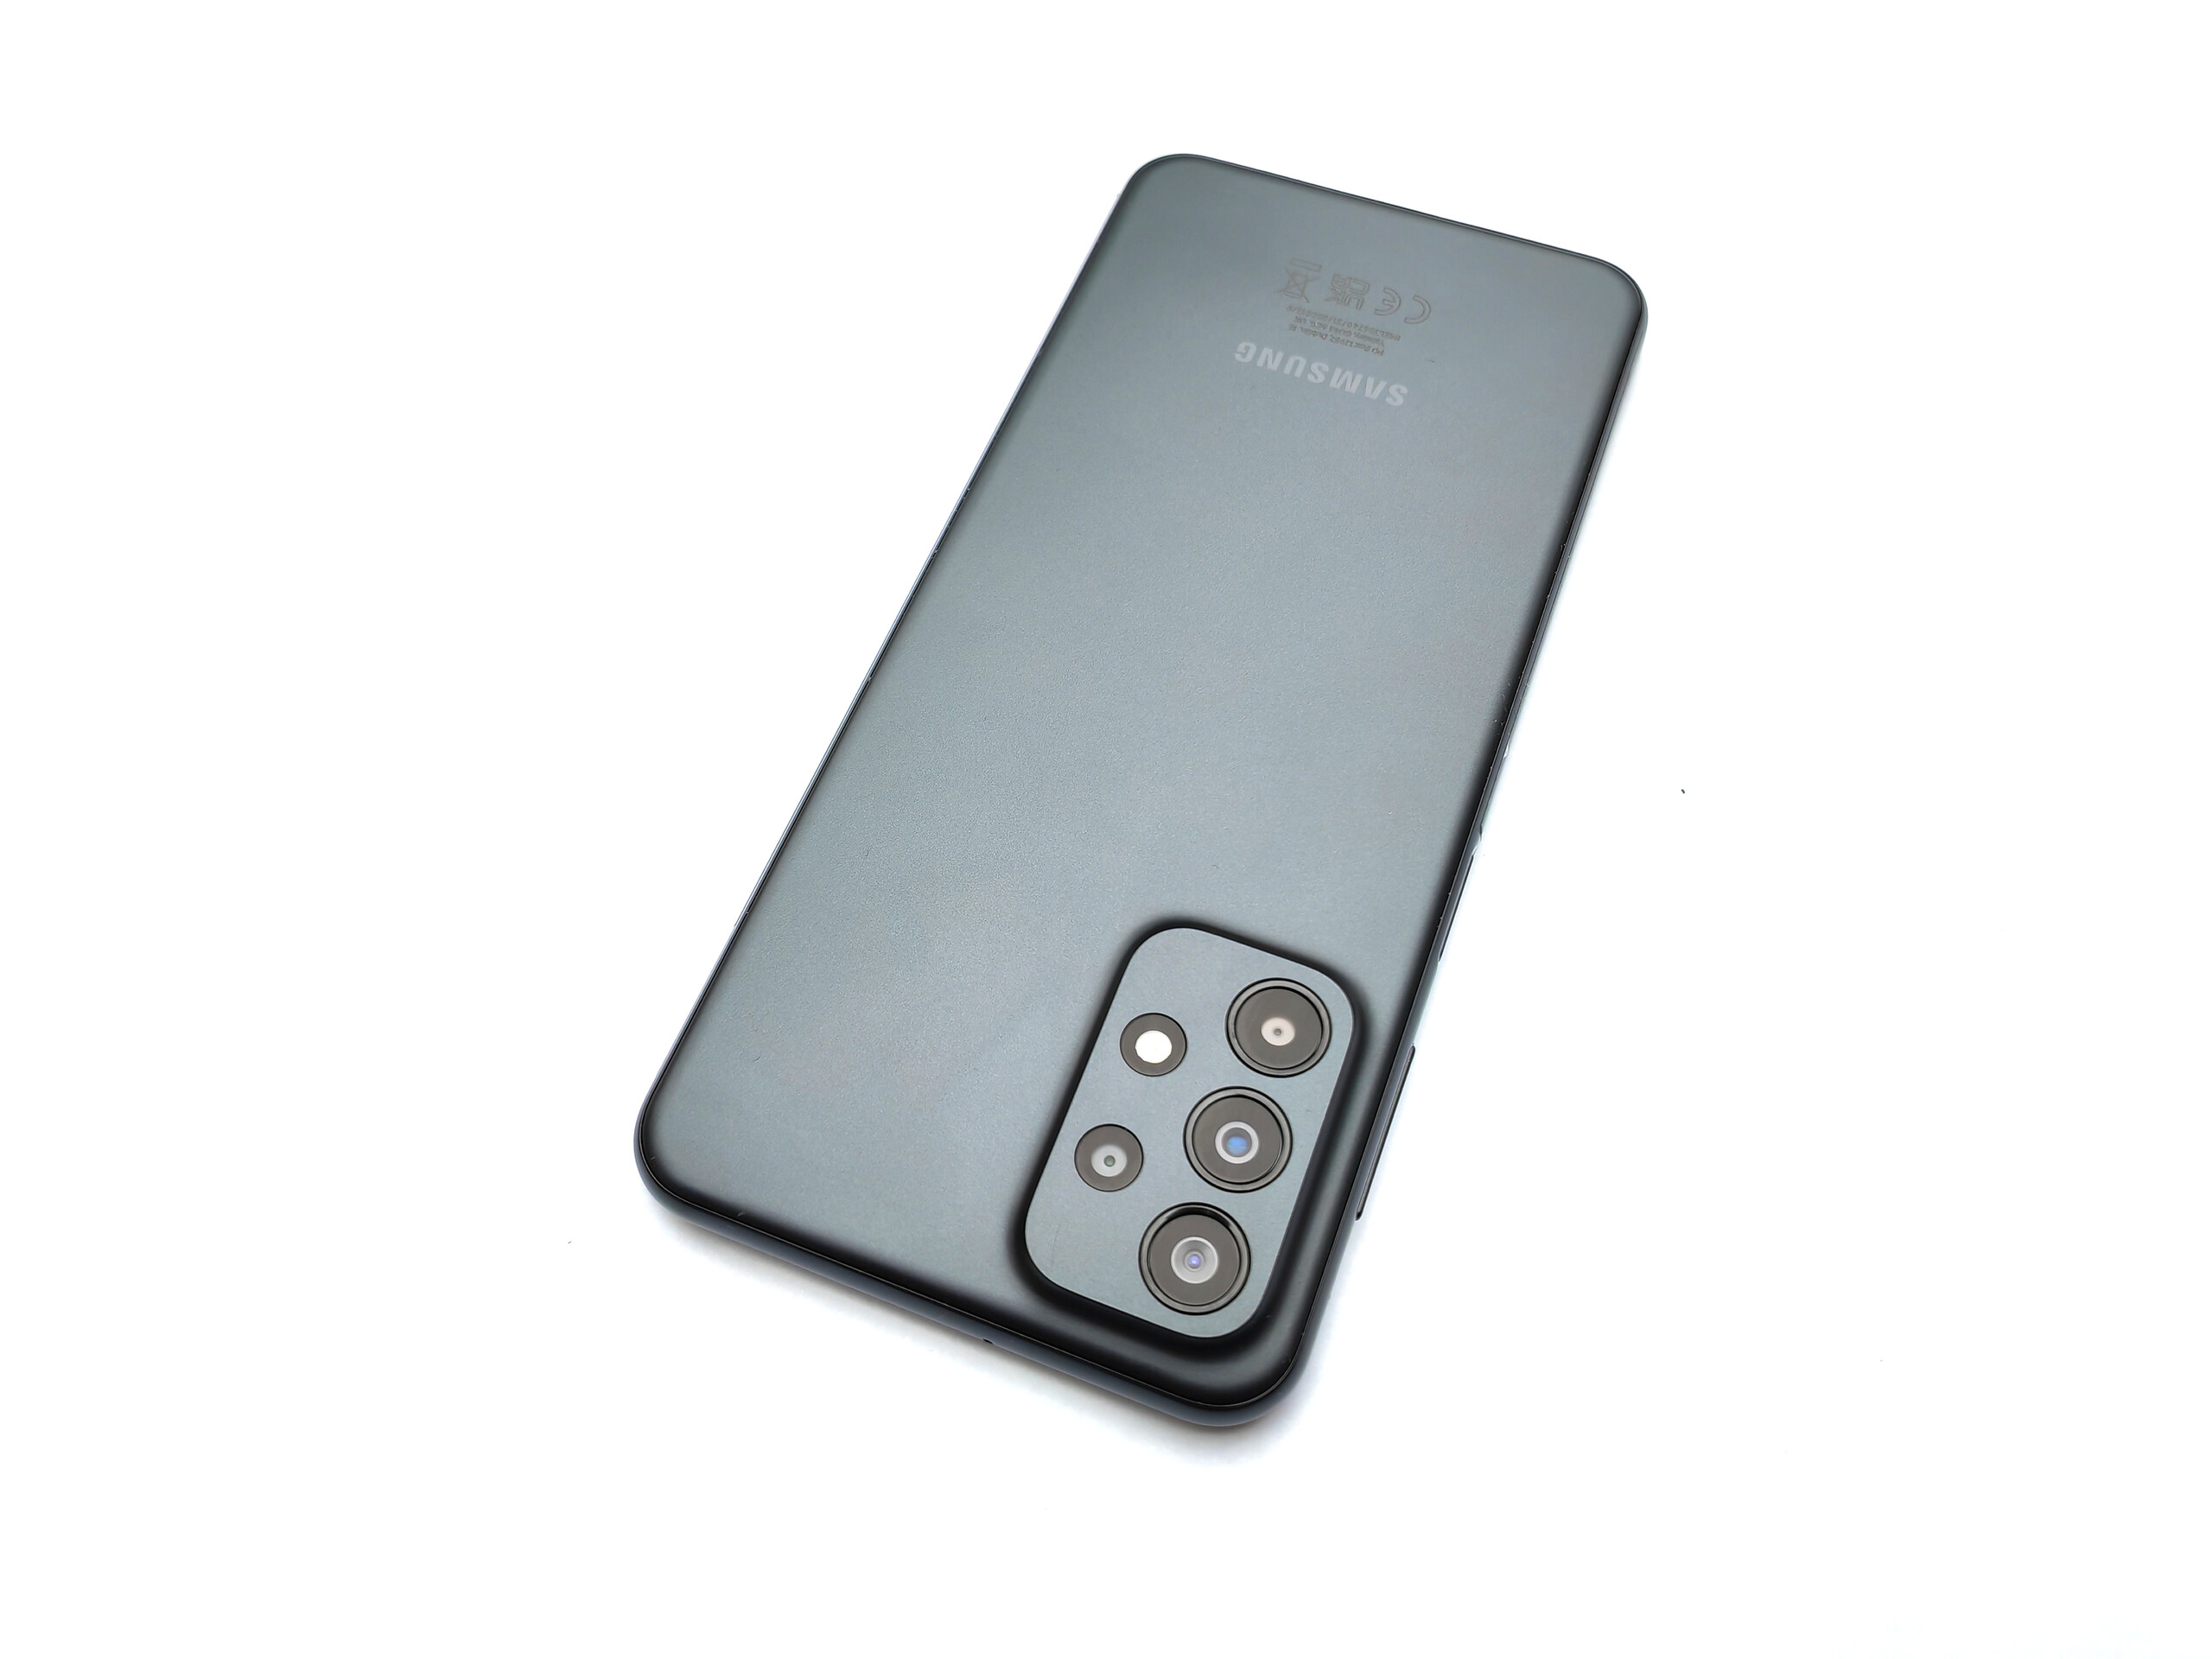 Samsung Galaxy A23 5G With Single 50-Megapixel Rear Camera, IP68